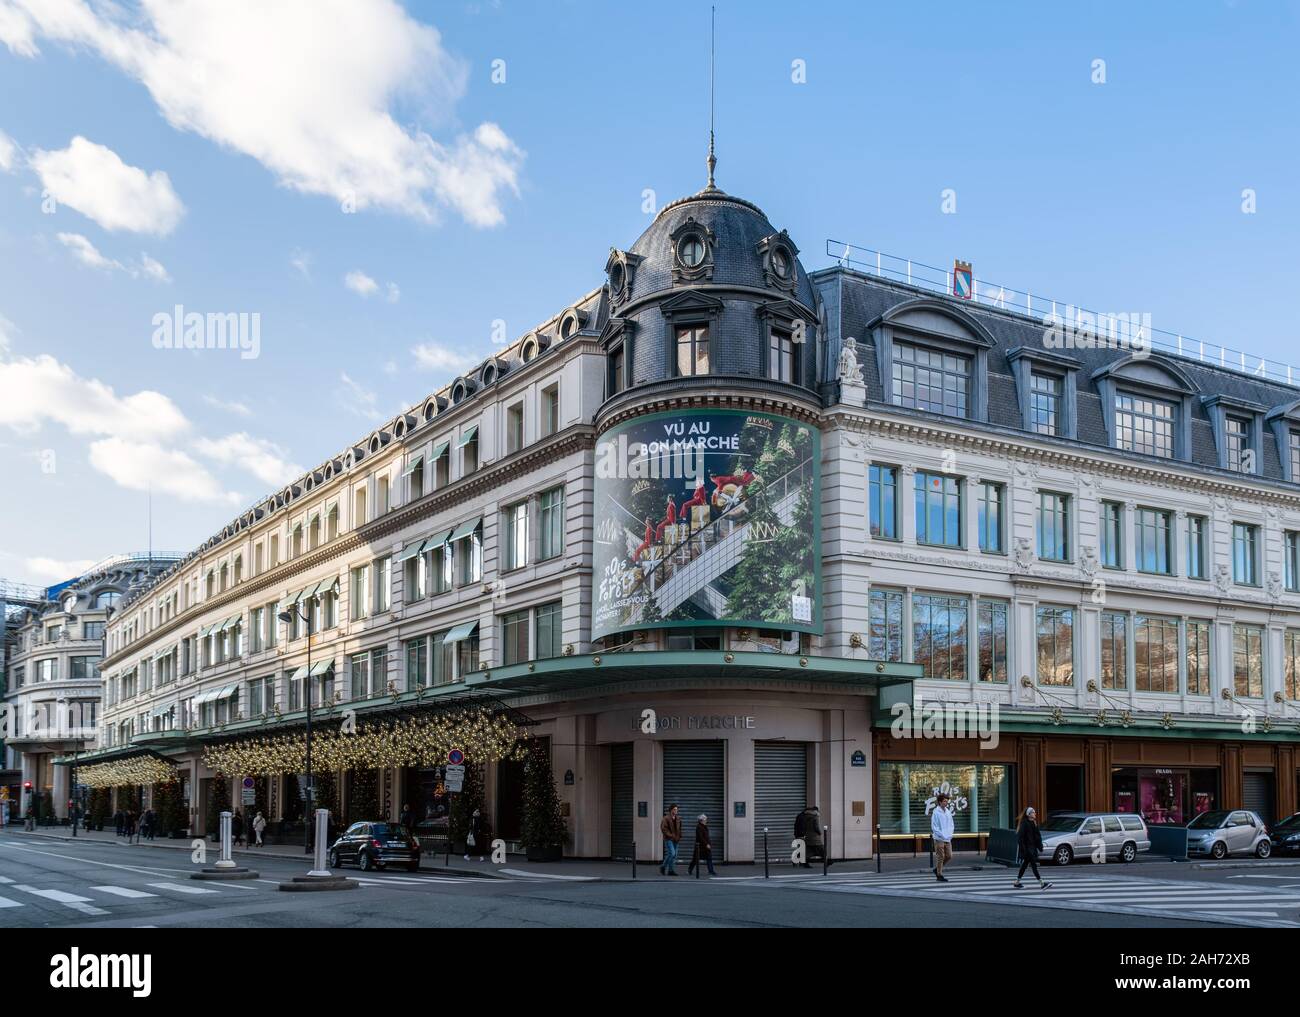 Le grand epicerie paris hi-res stock photography and images - Alamy